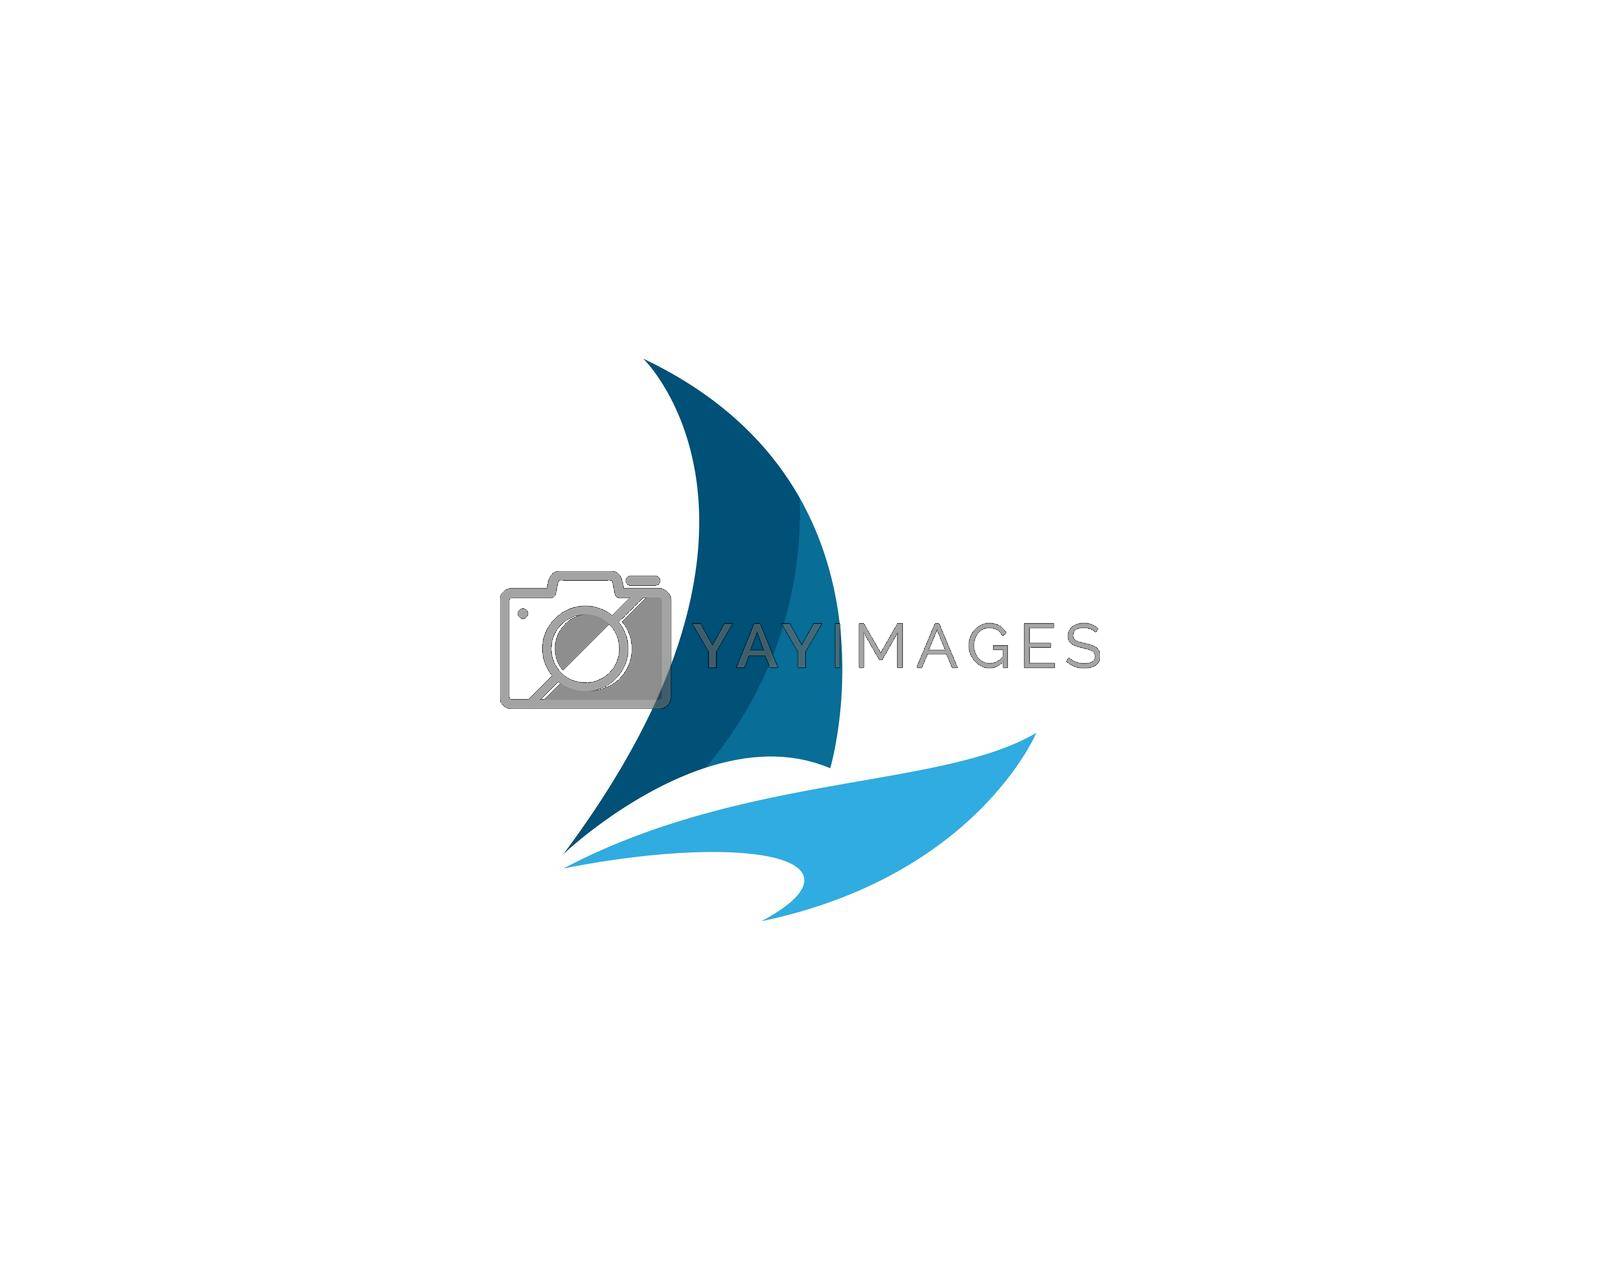 Royalty free image of Sailing boat logo by awk